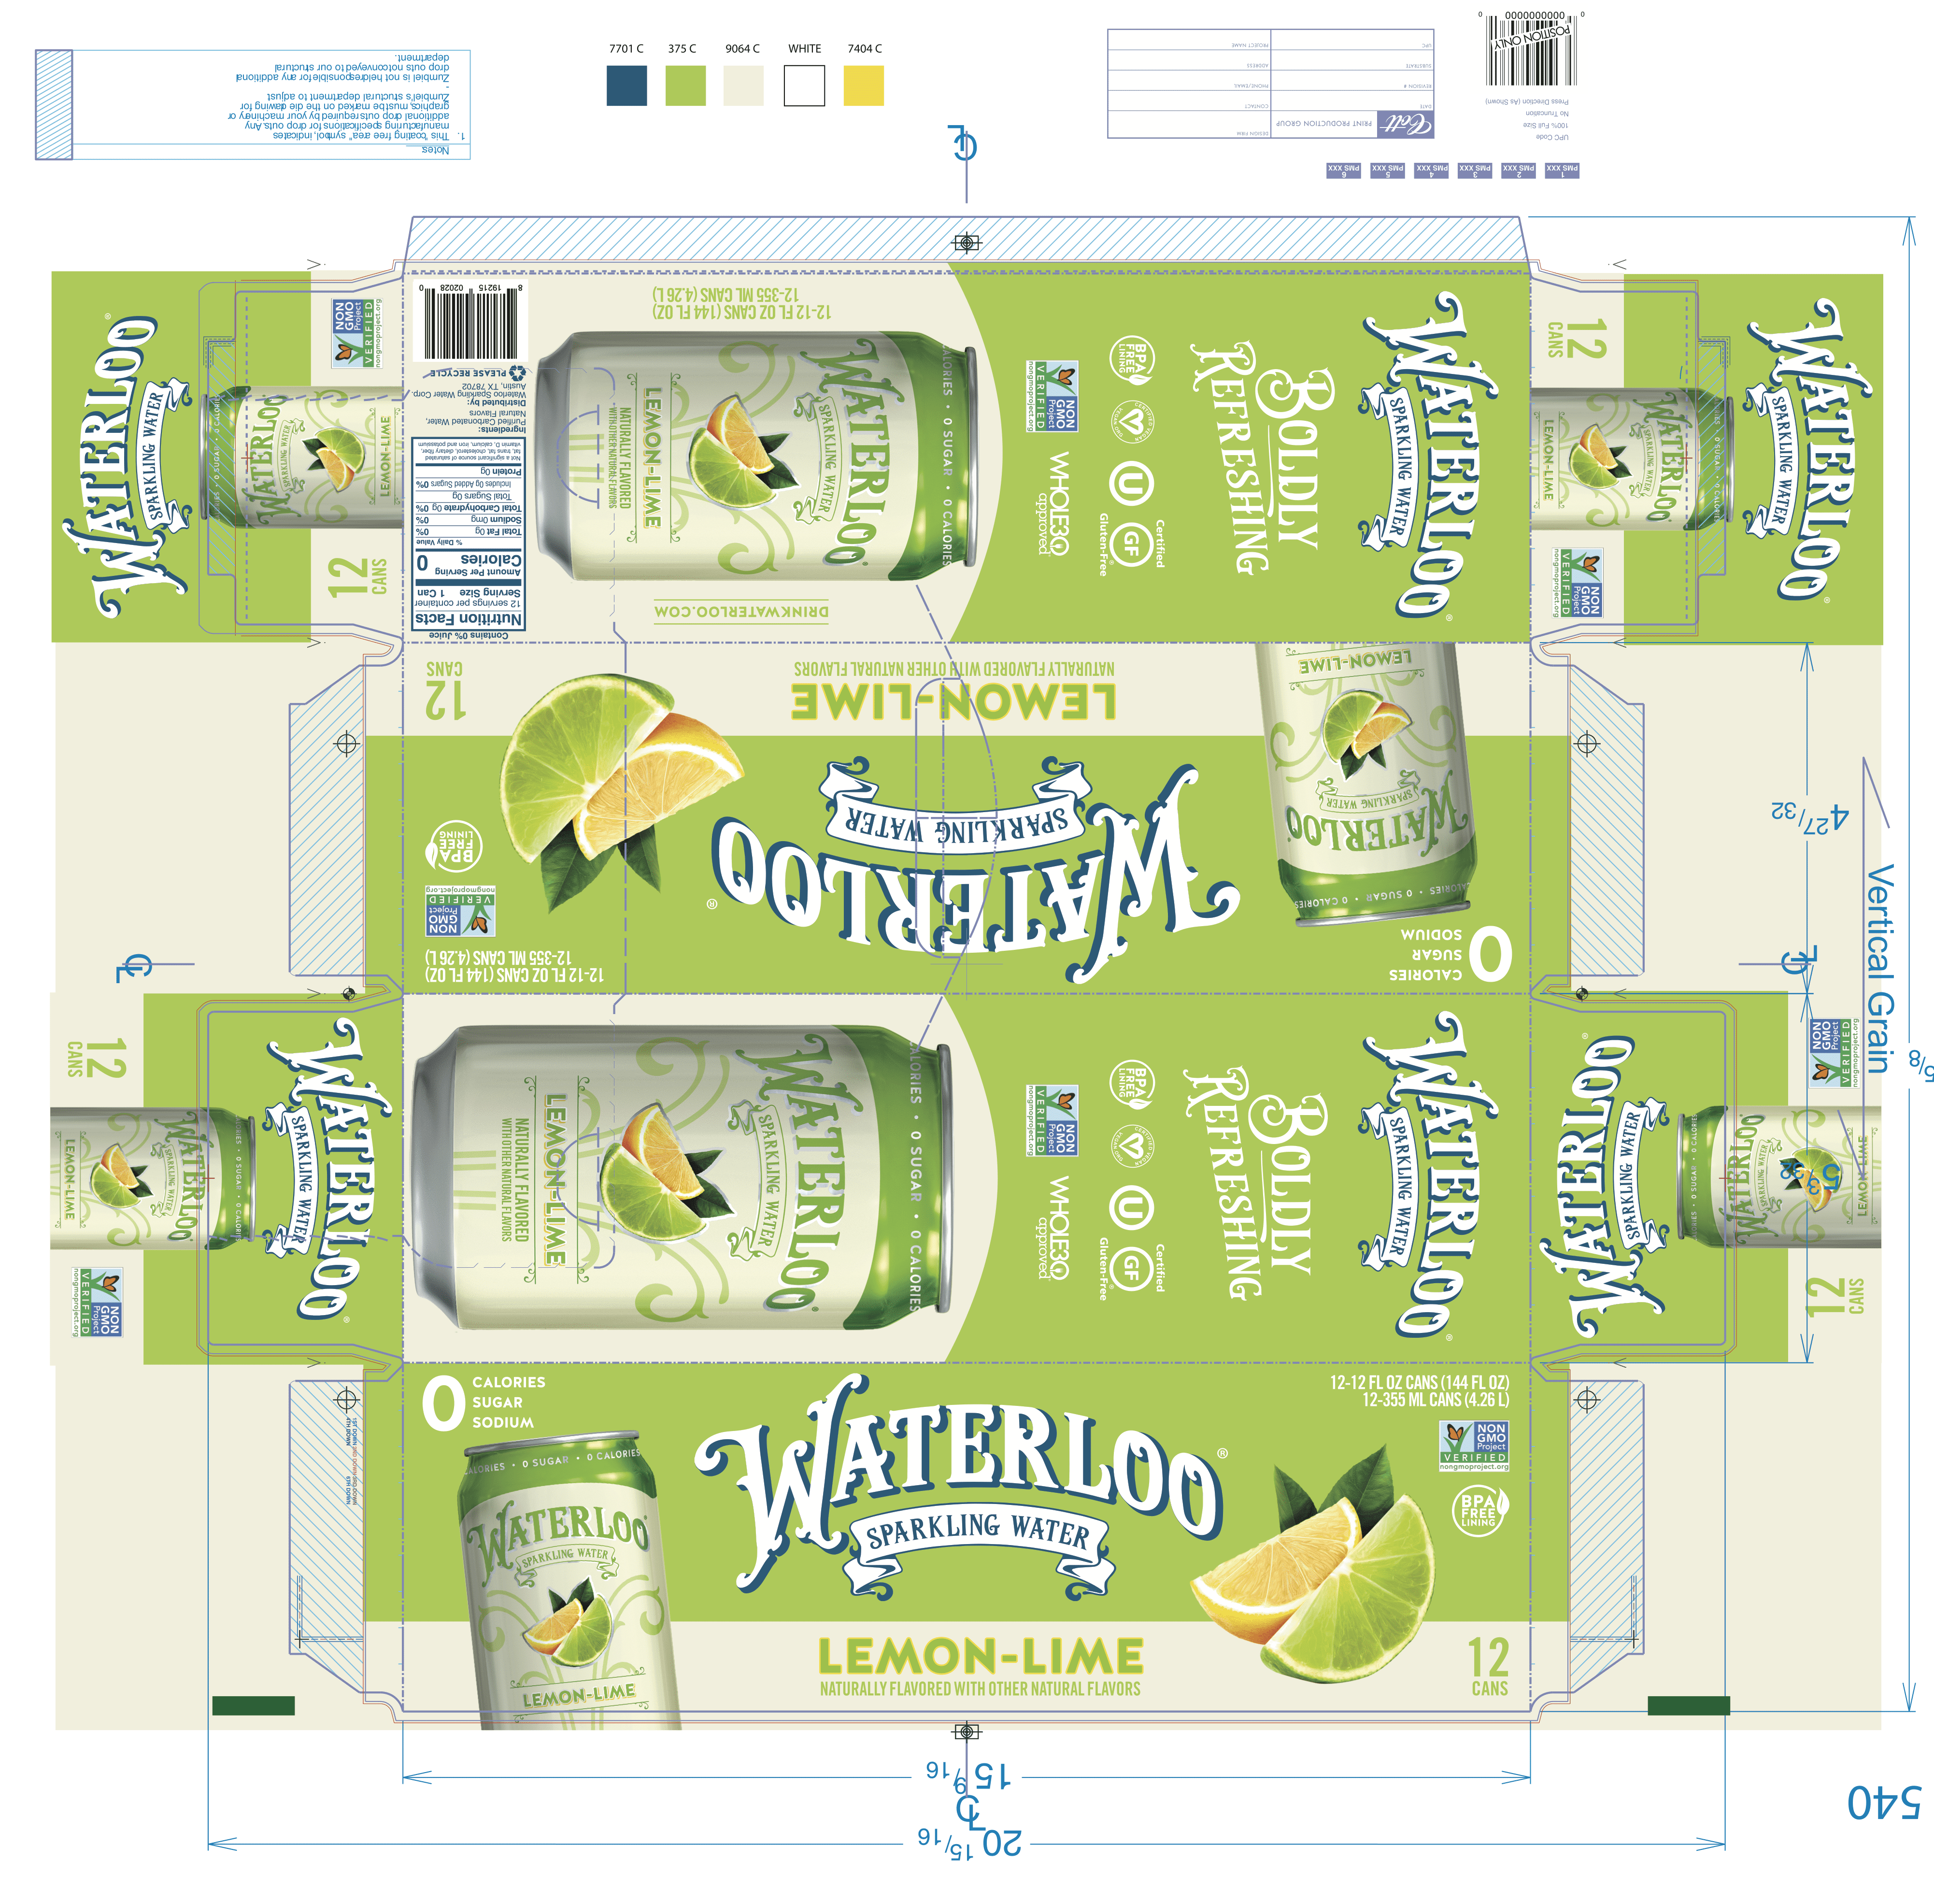 Waterloo Lemon-Lime Sparkling Water 2 innerpacks per case 144.0 fl Product Label